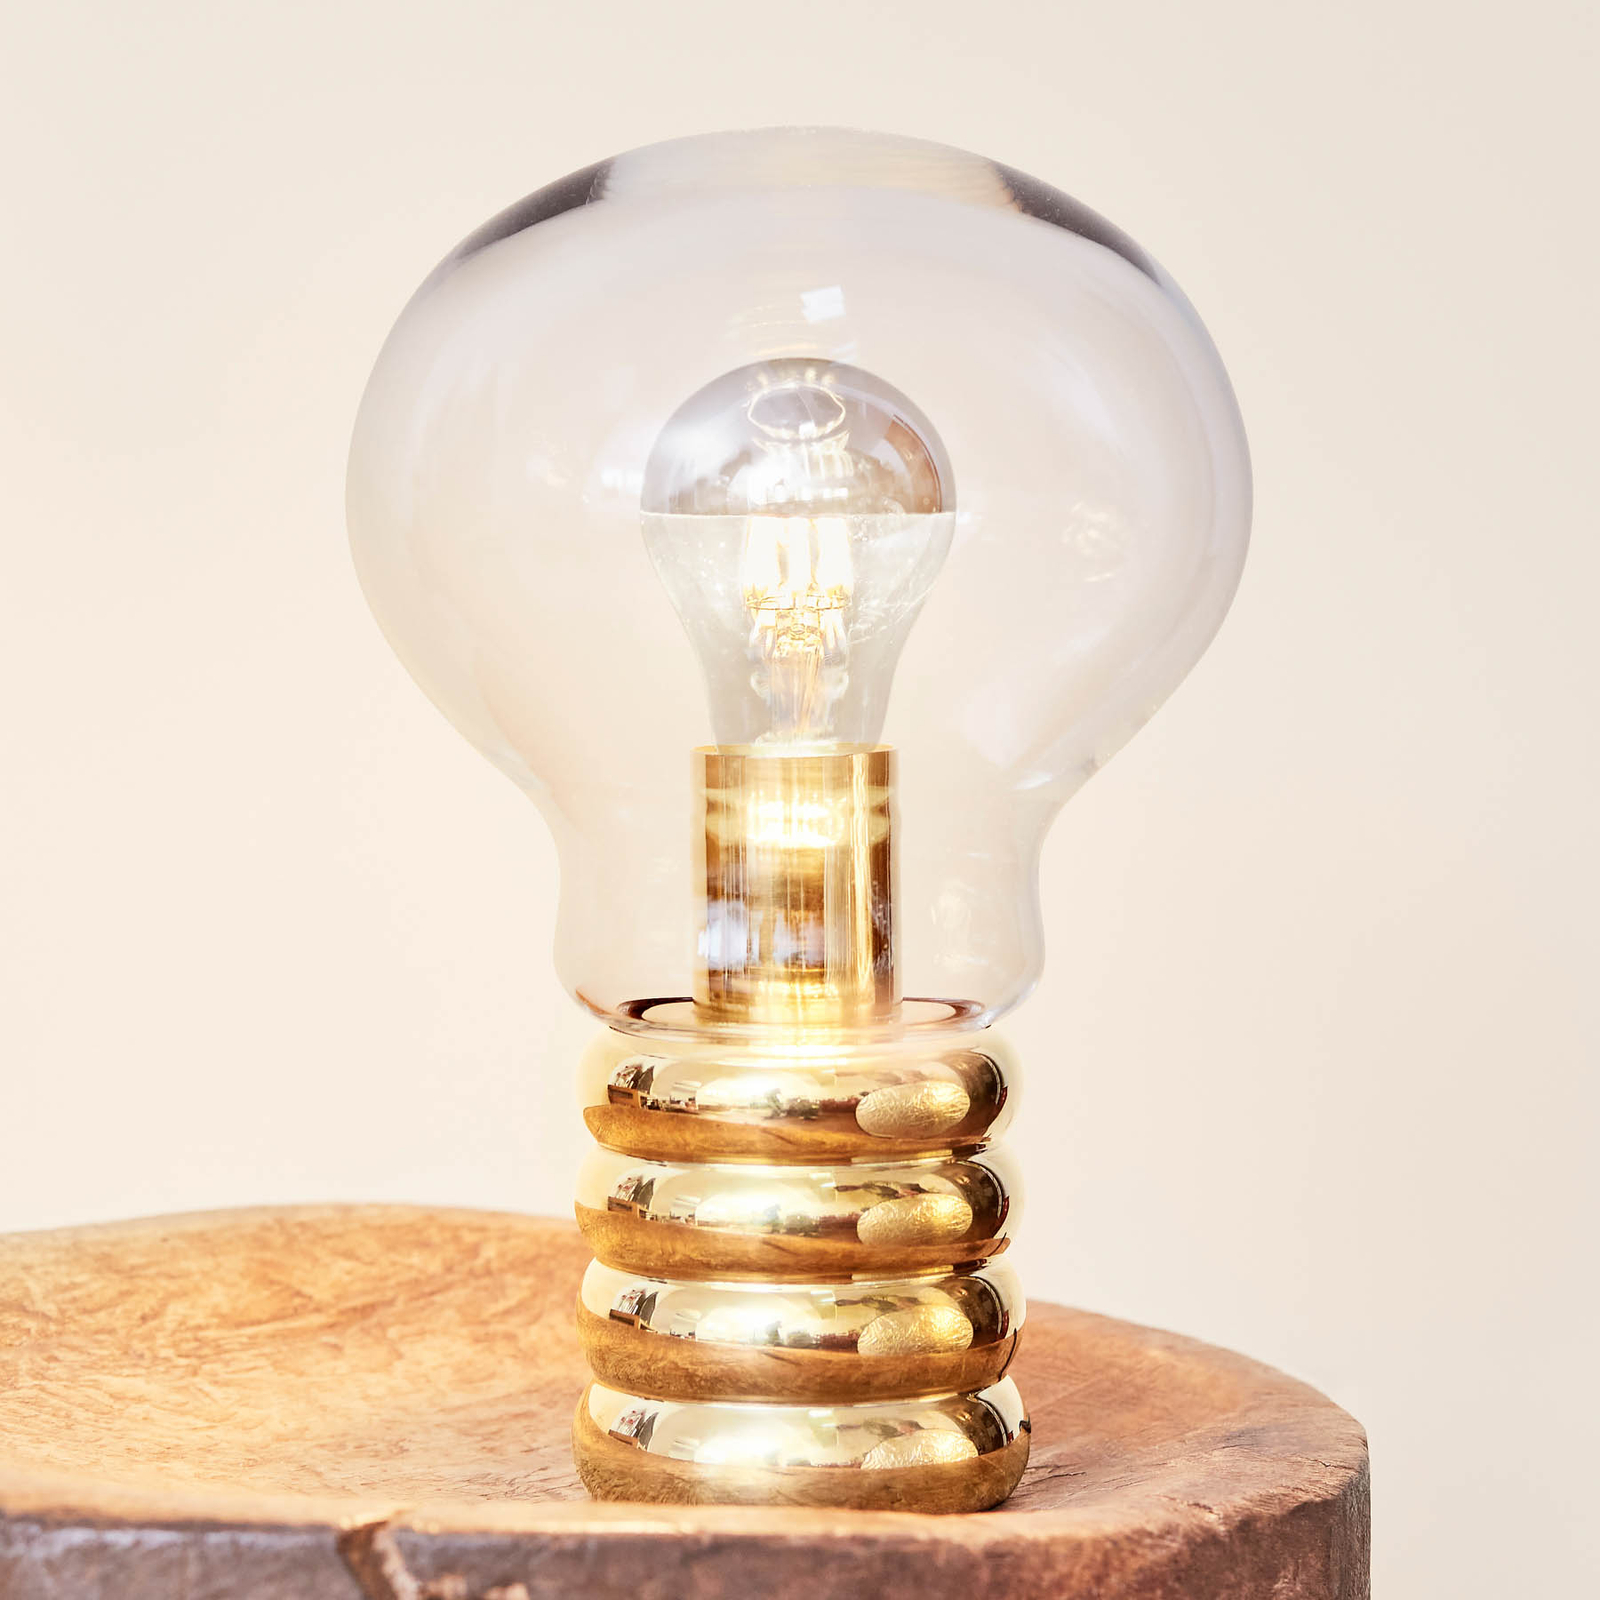 Ingo Maurer Bulb Brass LED tafellamp, messing